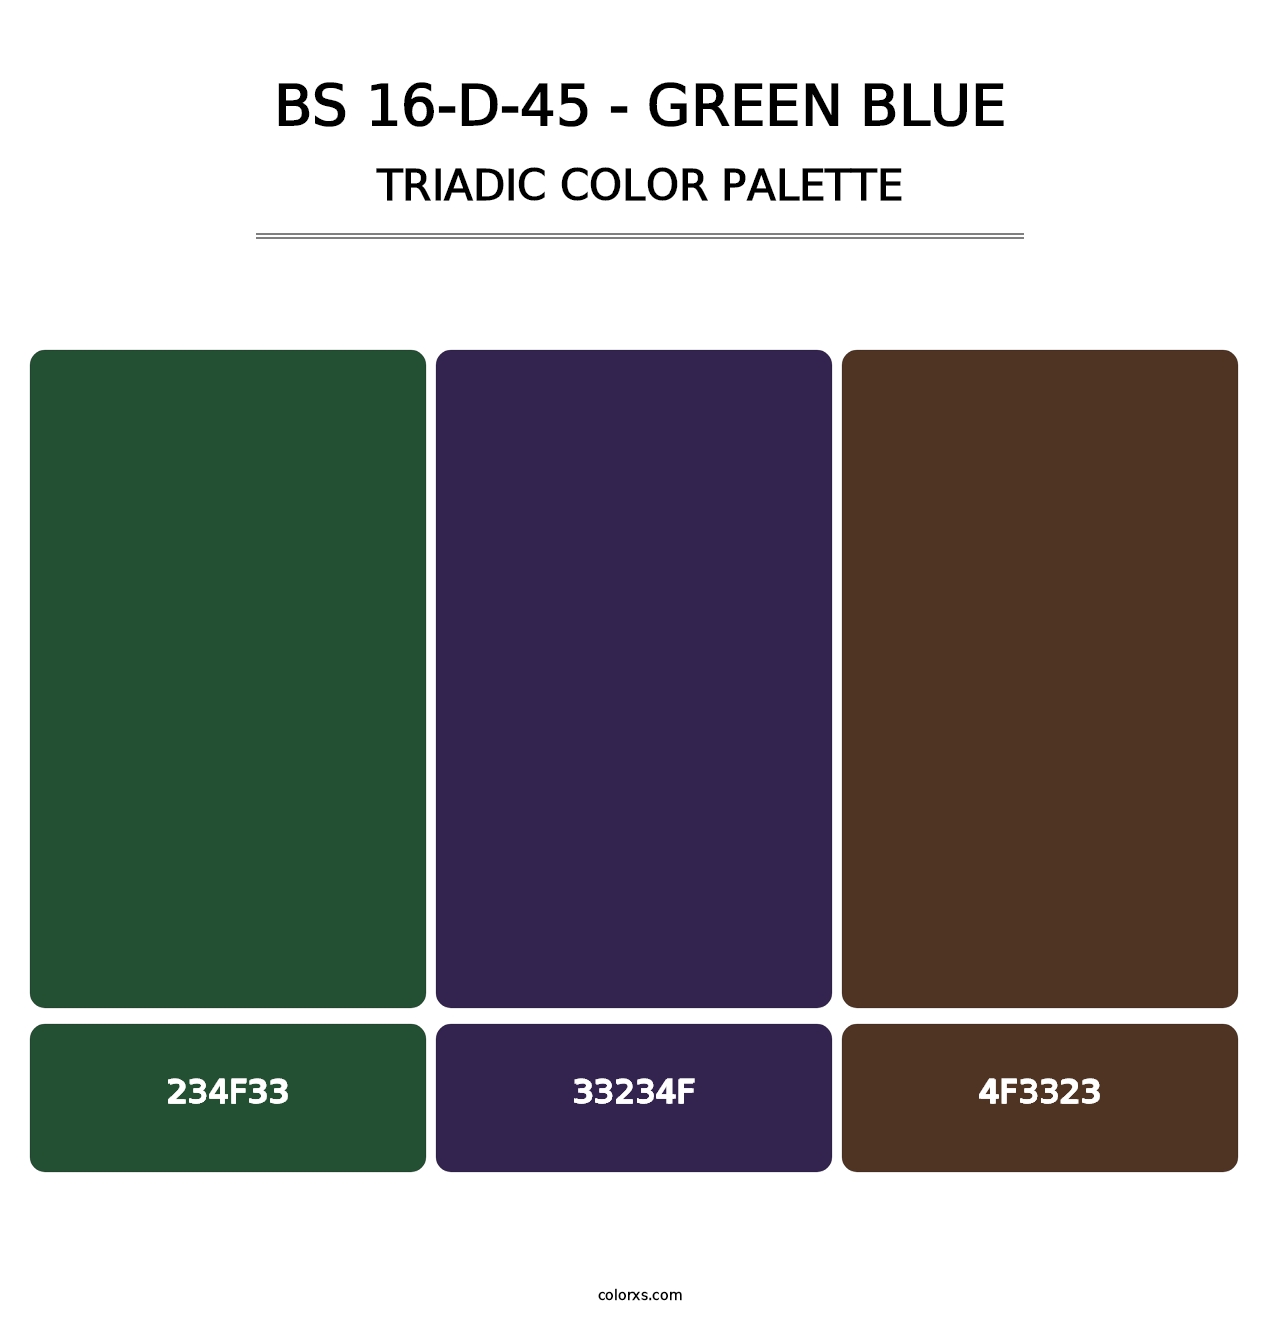 BS 16-D-45 - Green Blue - Triadic Color Palette